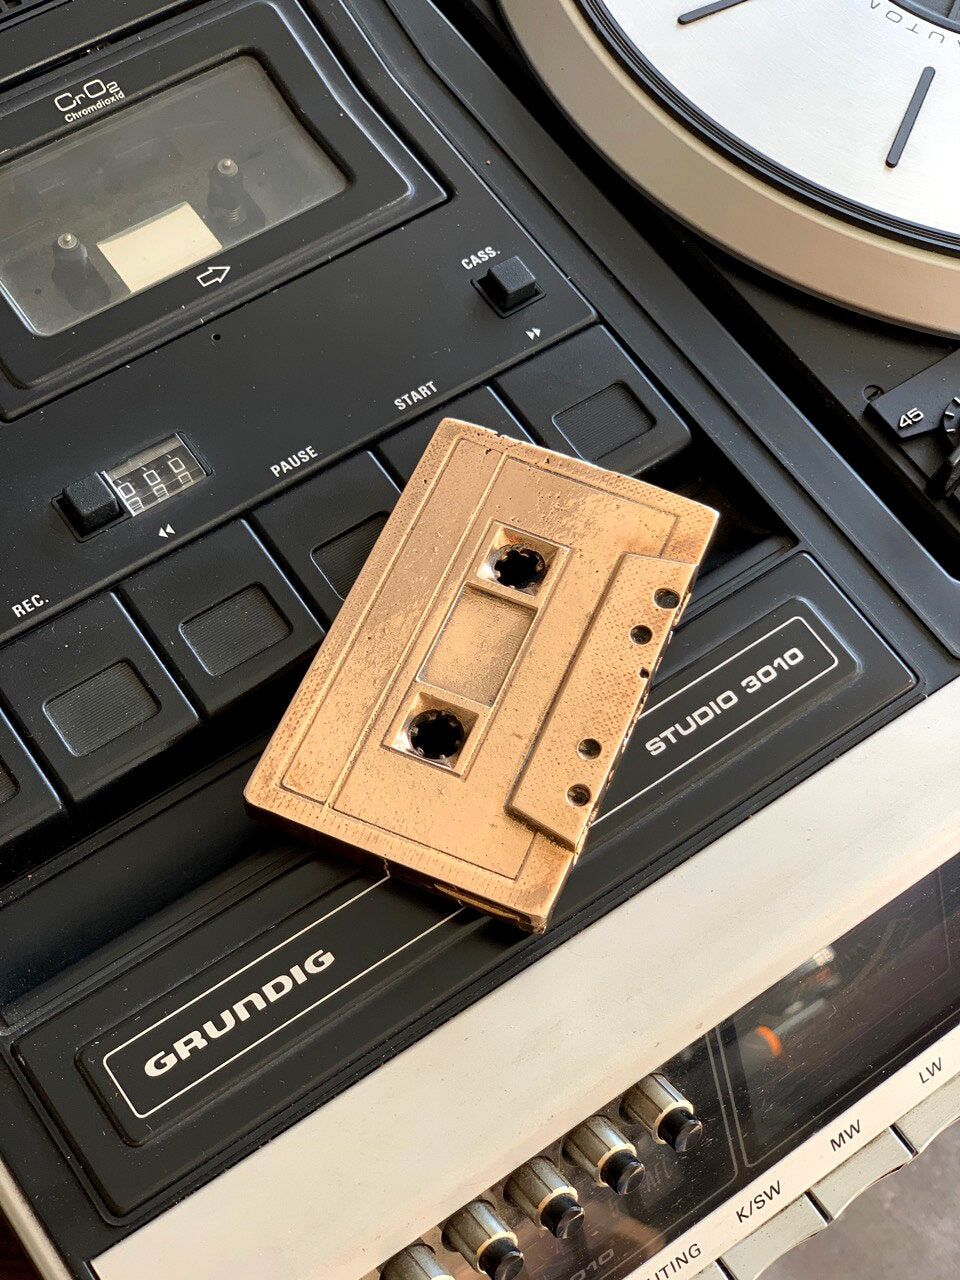 Bronze Cassette Mix Tape by Nancy Pearce on retro tape deck